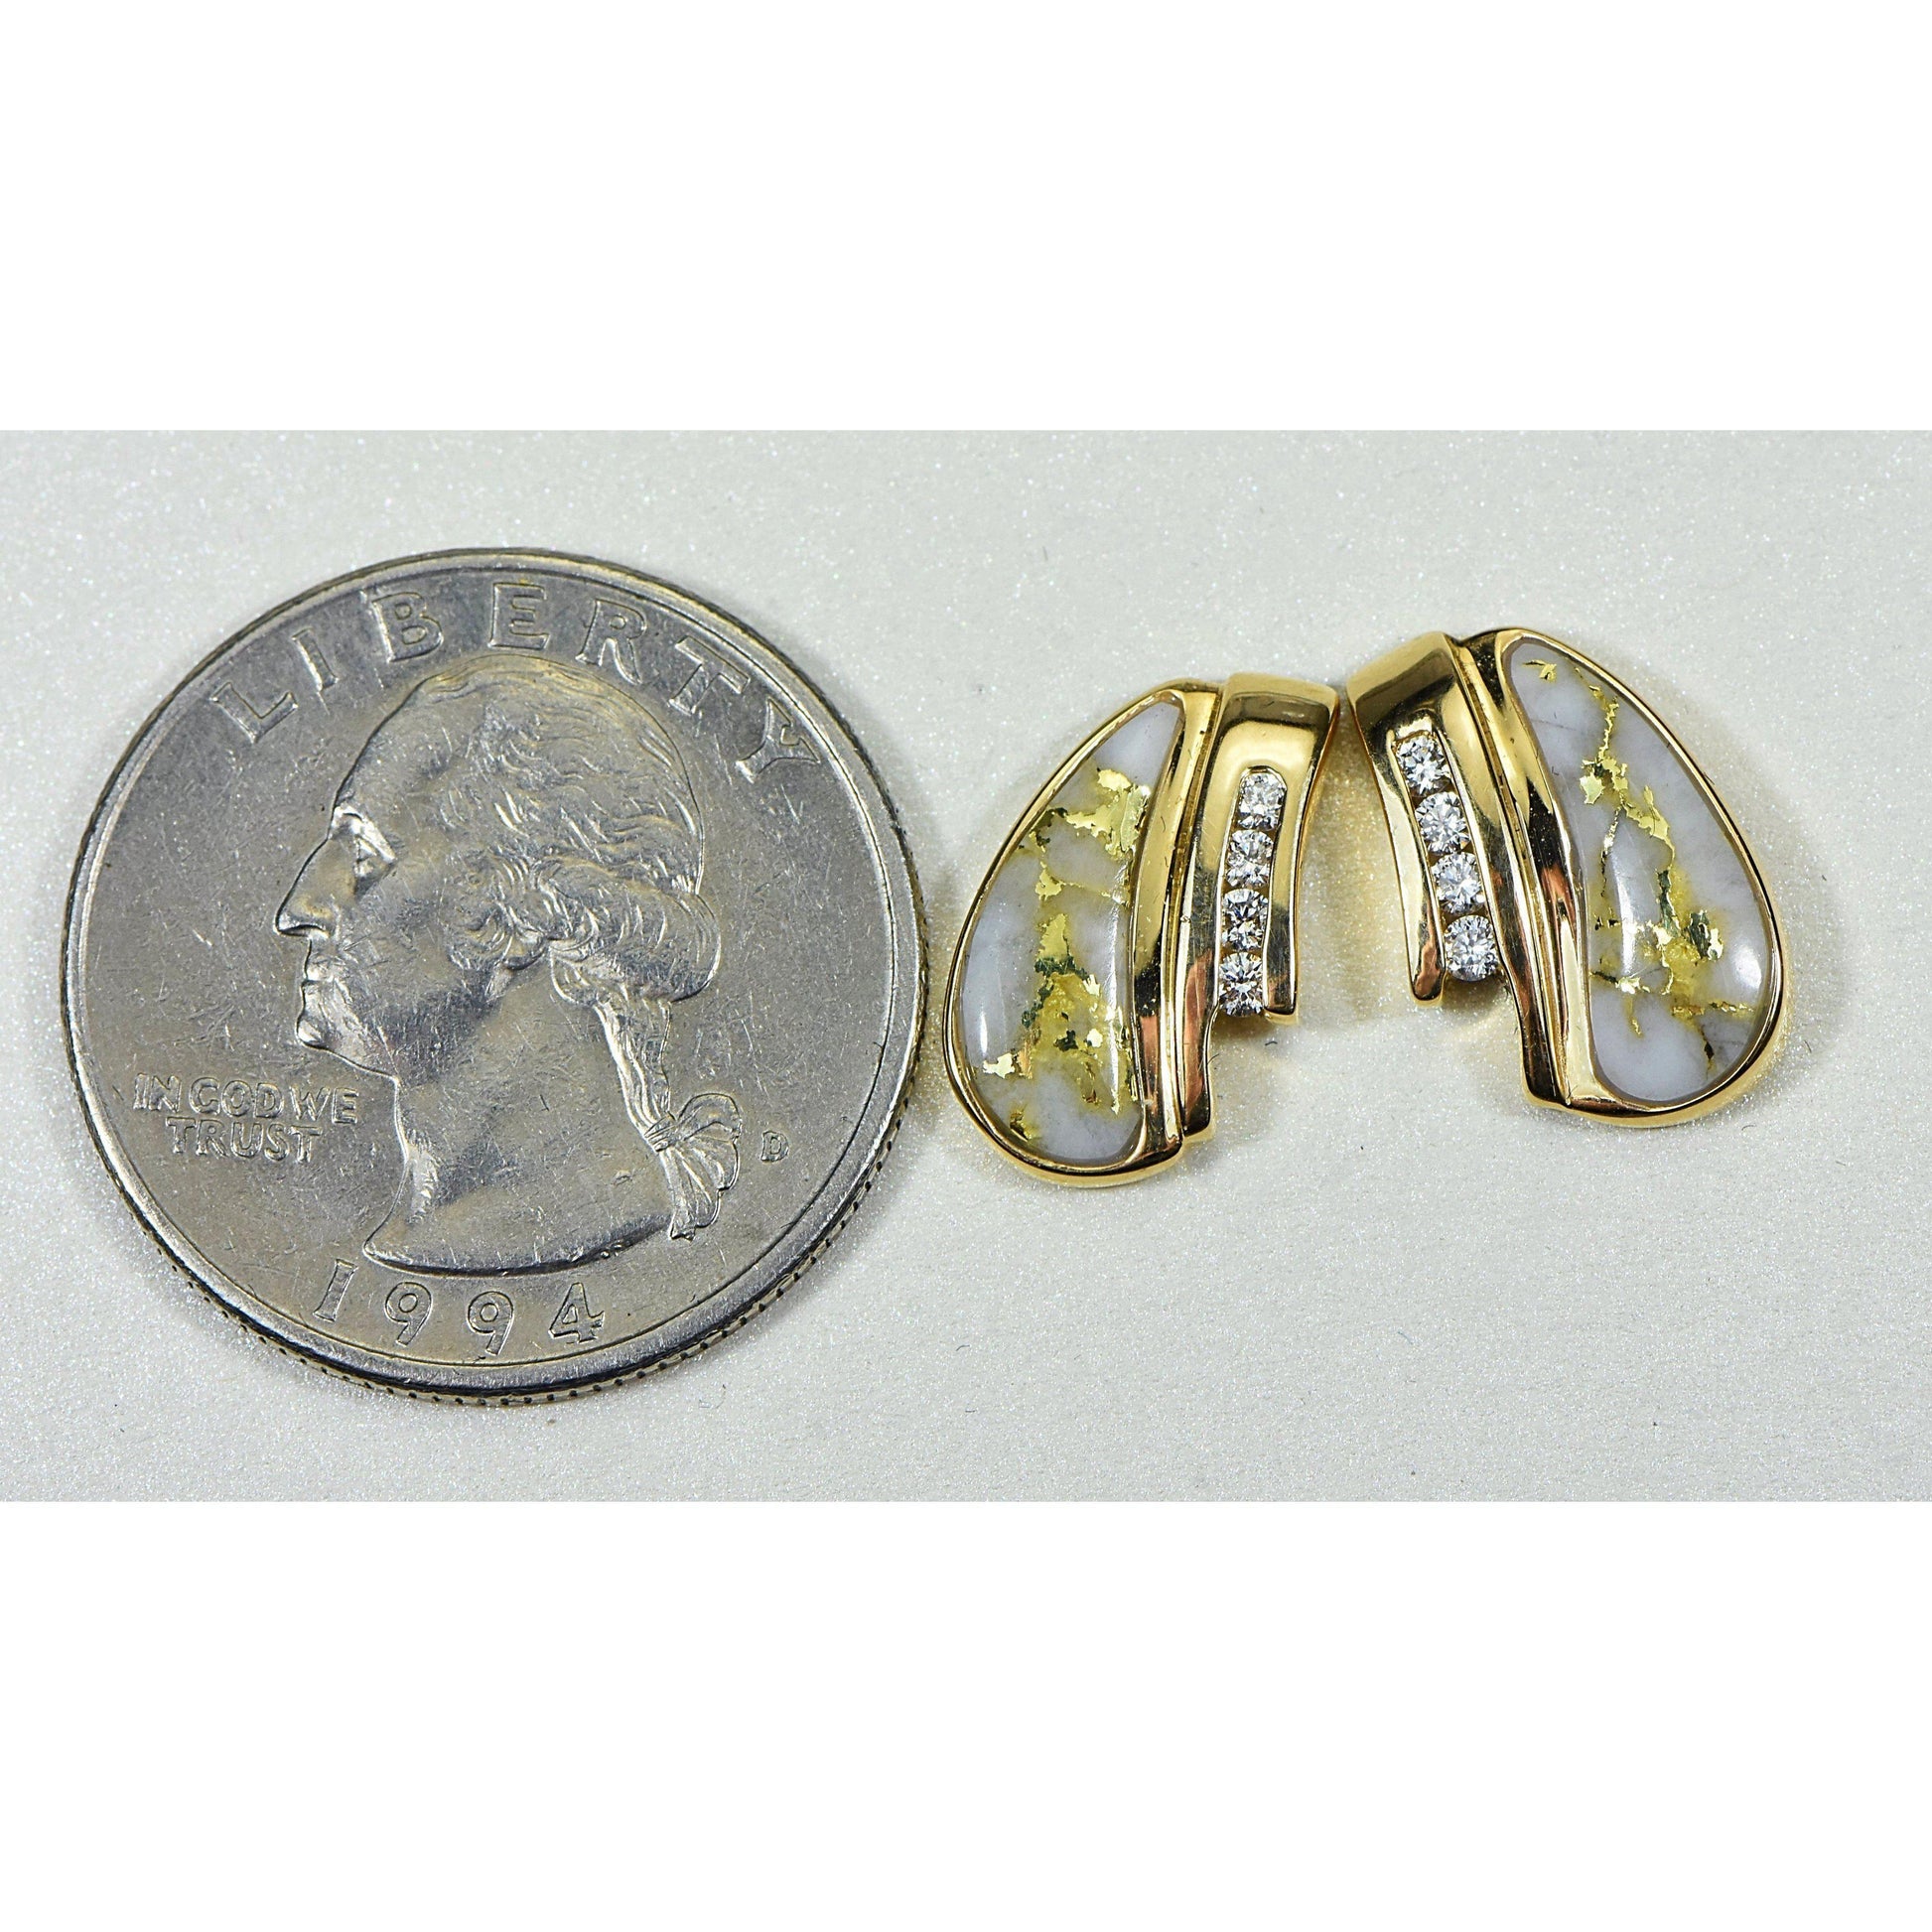 Orocal Gold Quartz Earrings Post Backs with Diamonds EDL47D16Q-Destination Gold Detectors